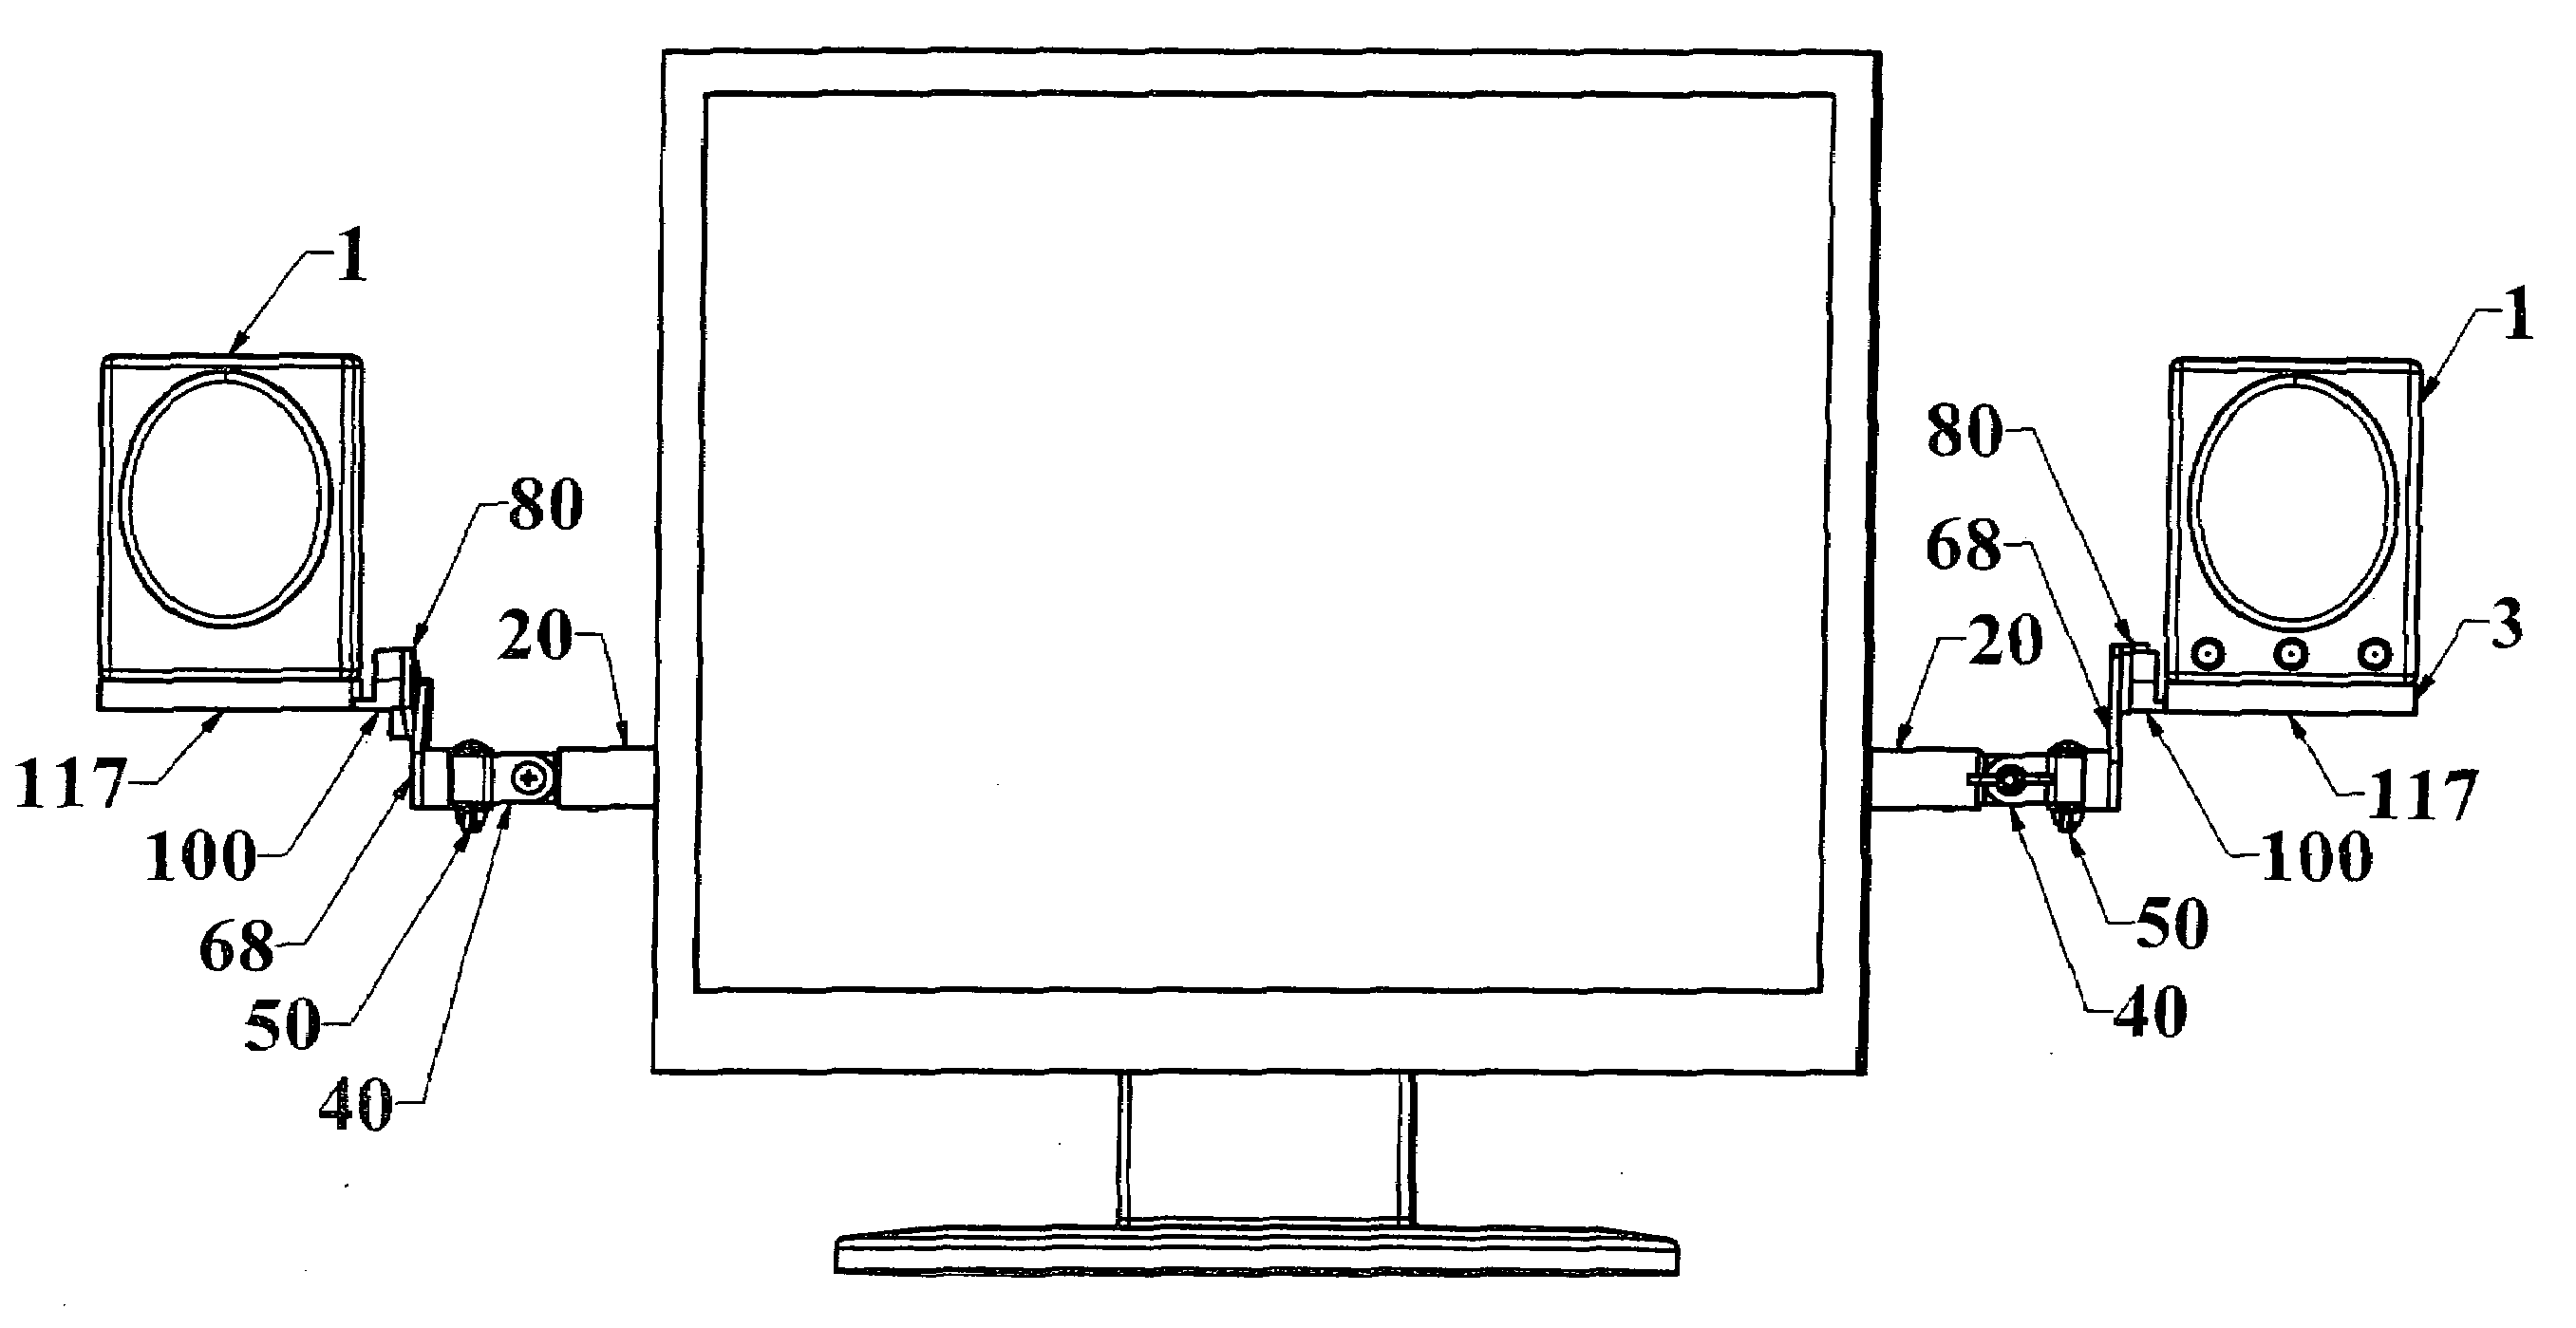 Flat panel speaker mounting system